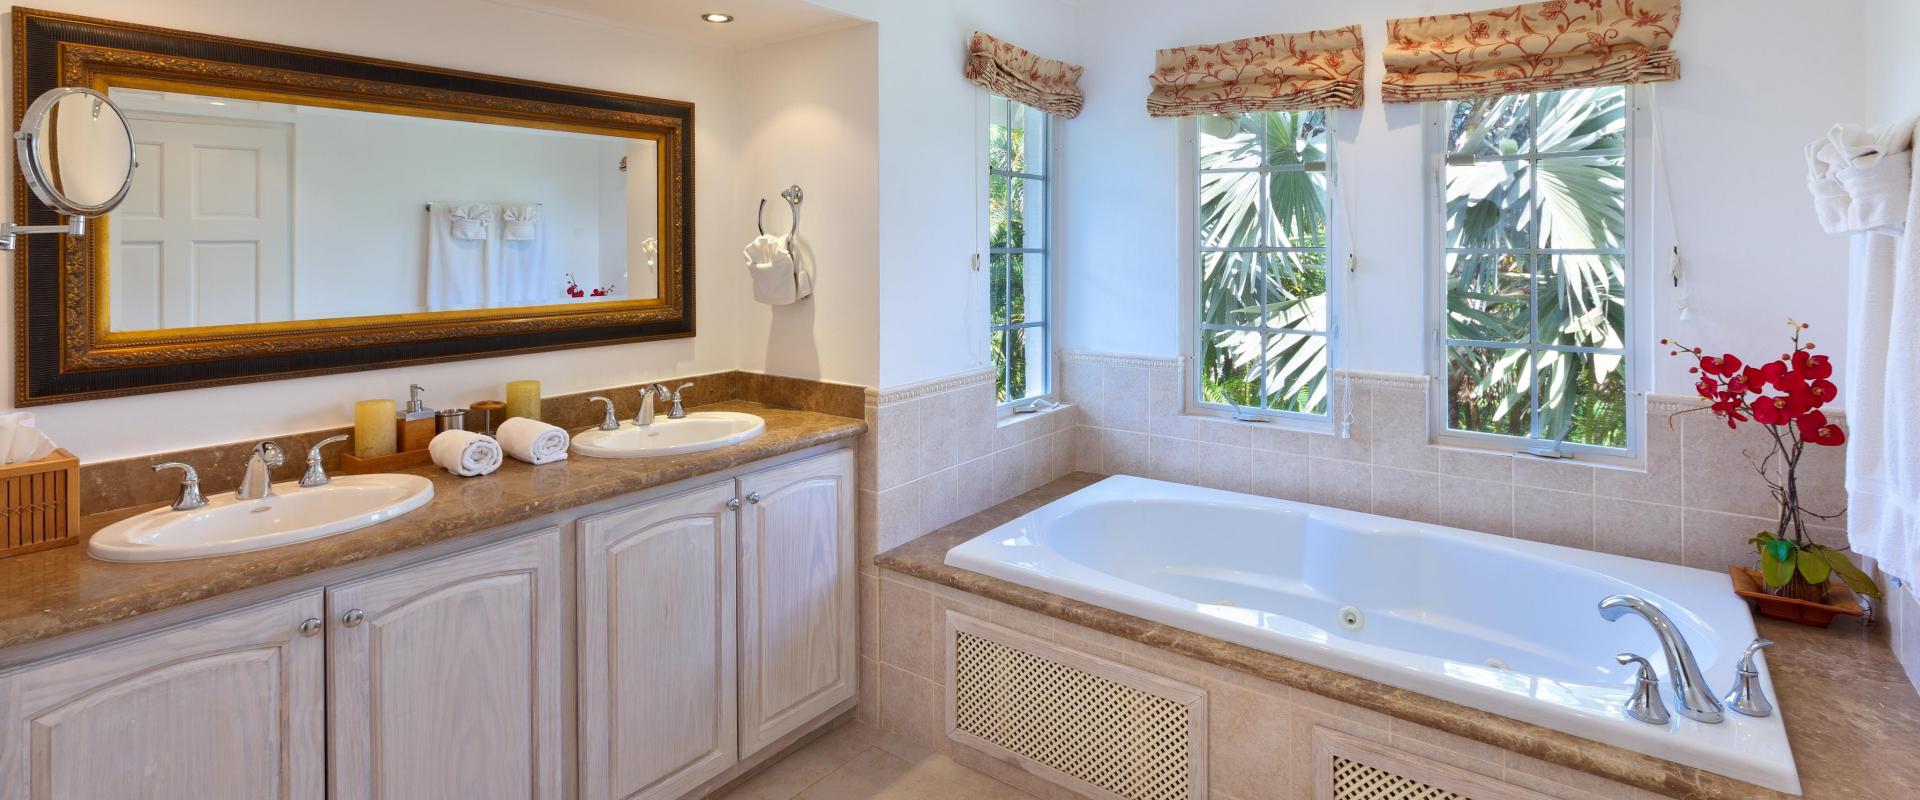 Sandy Lane Barbados Holiday Rental Rose of Sharon Bathroom Two With Tub